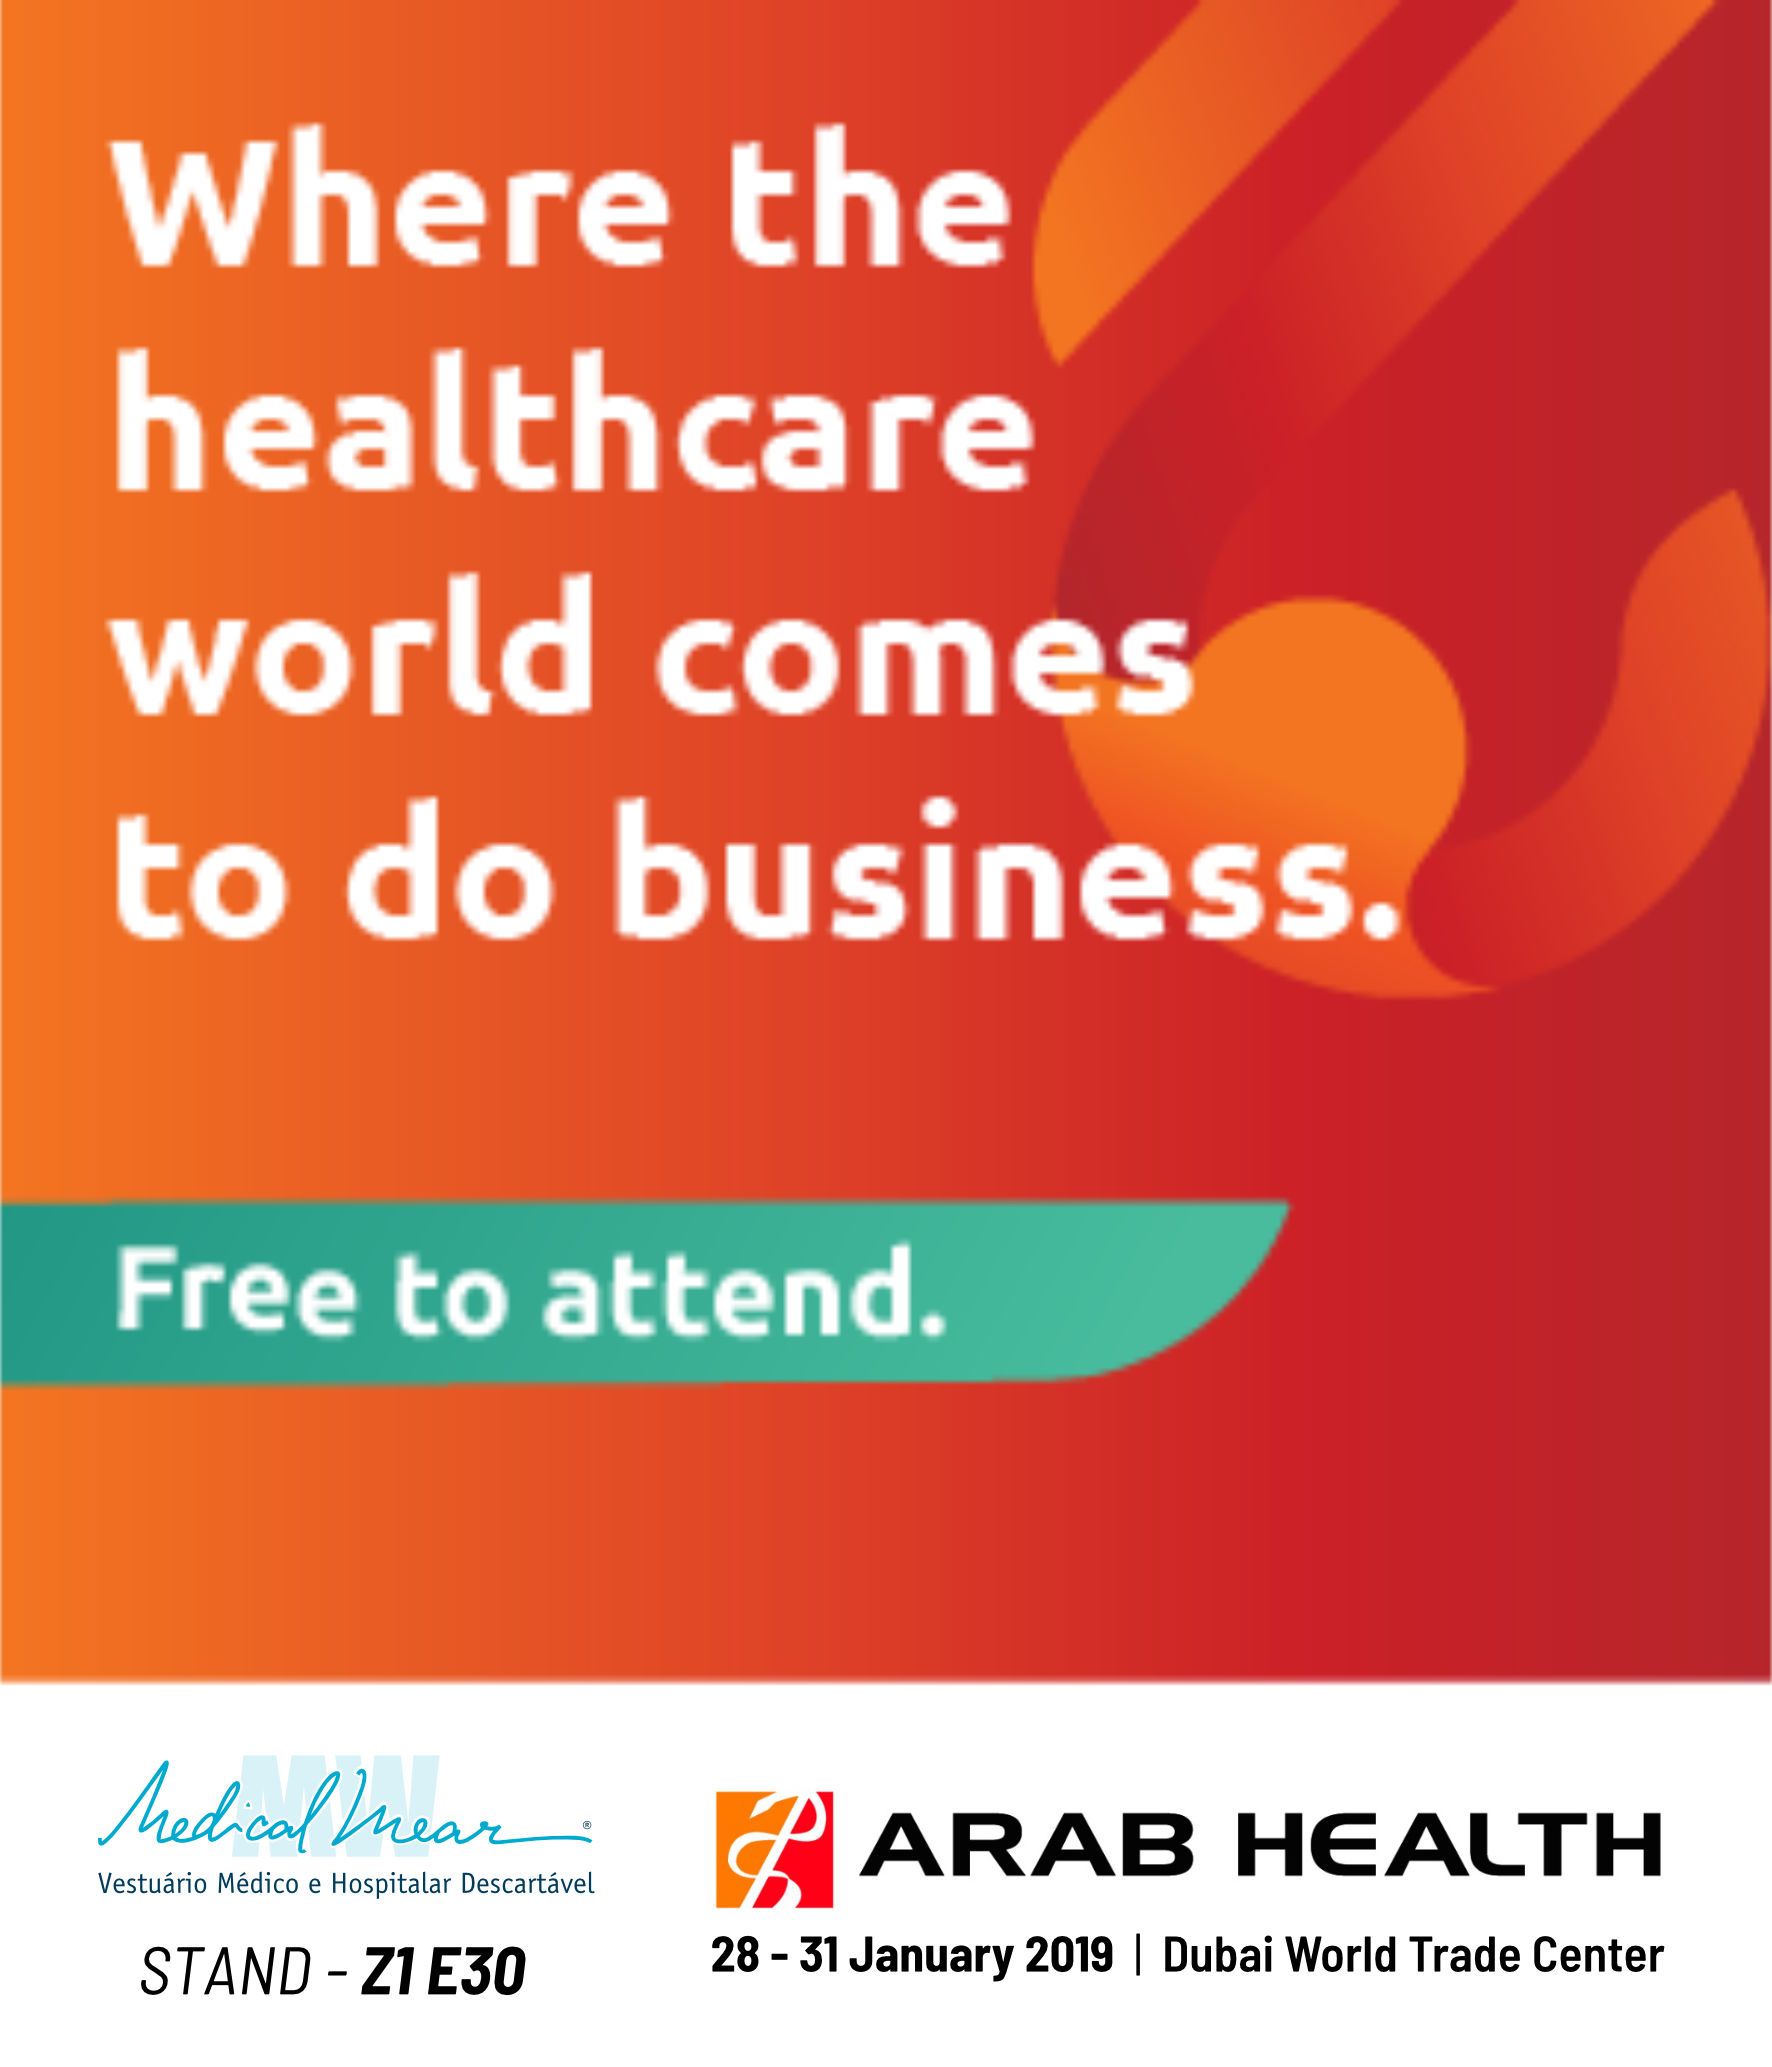 ARAB HEALTH 2019